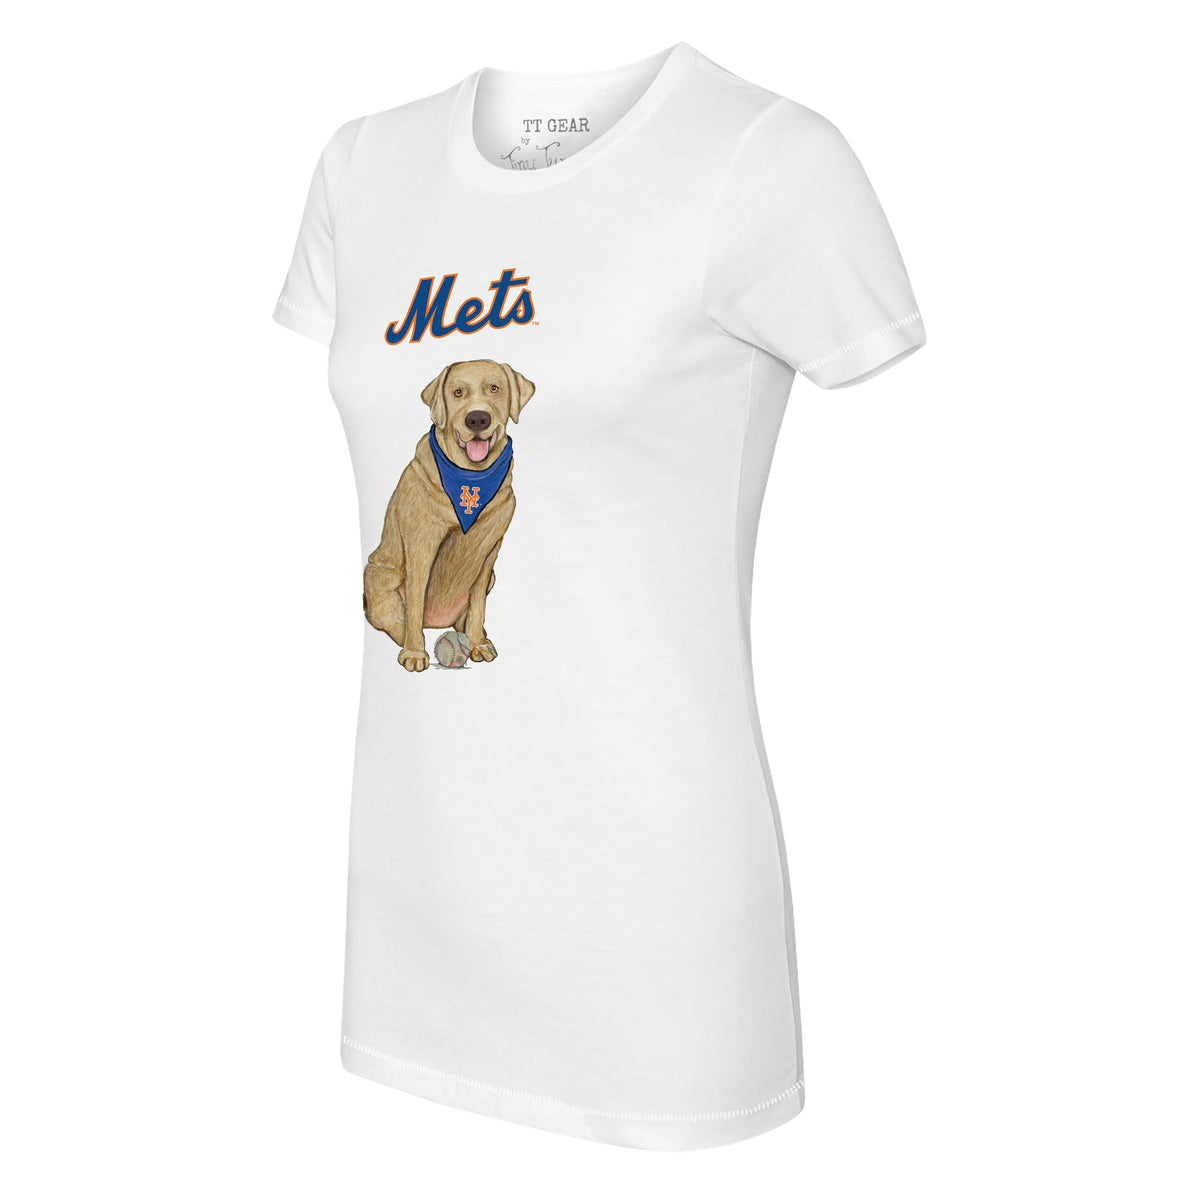 New York Mets Yellow Labrador Retriever Tee Shirt